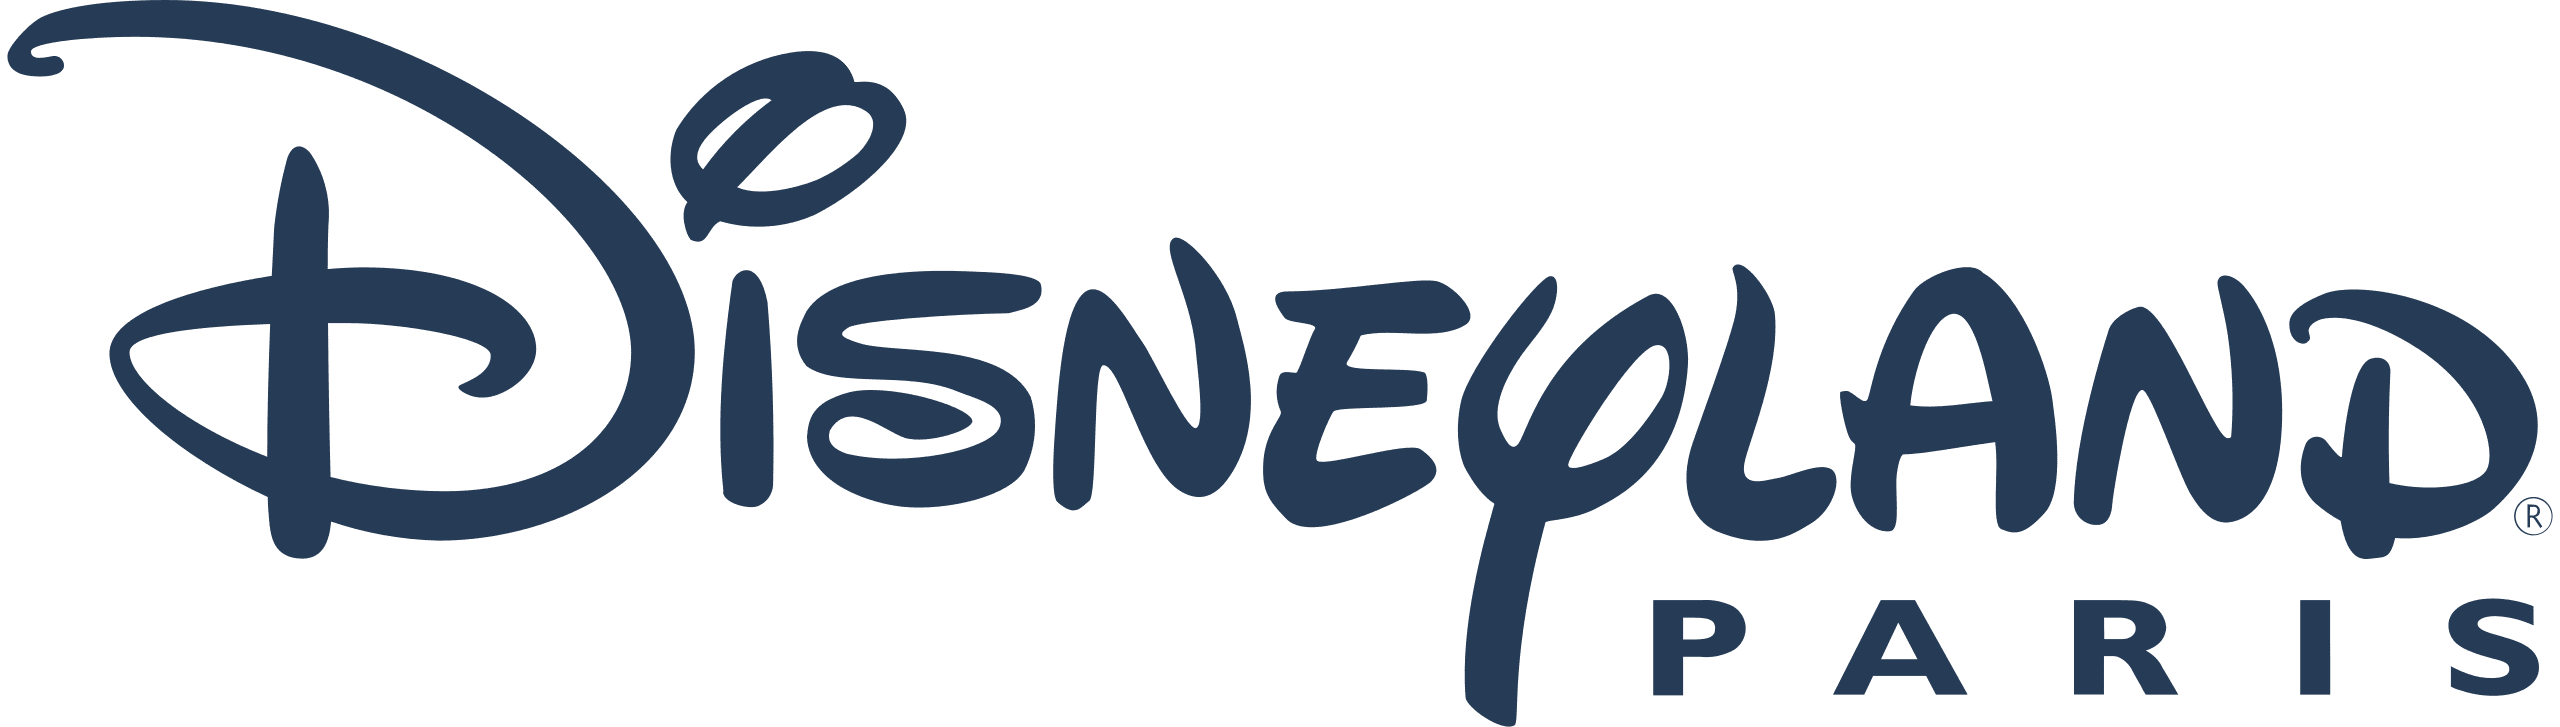 2560px-Disneyland_Paris_logo.svg